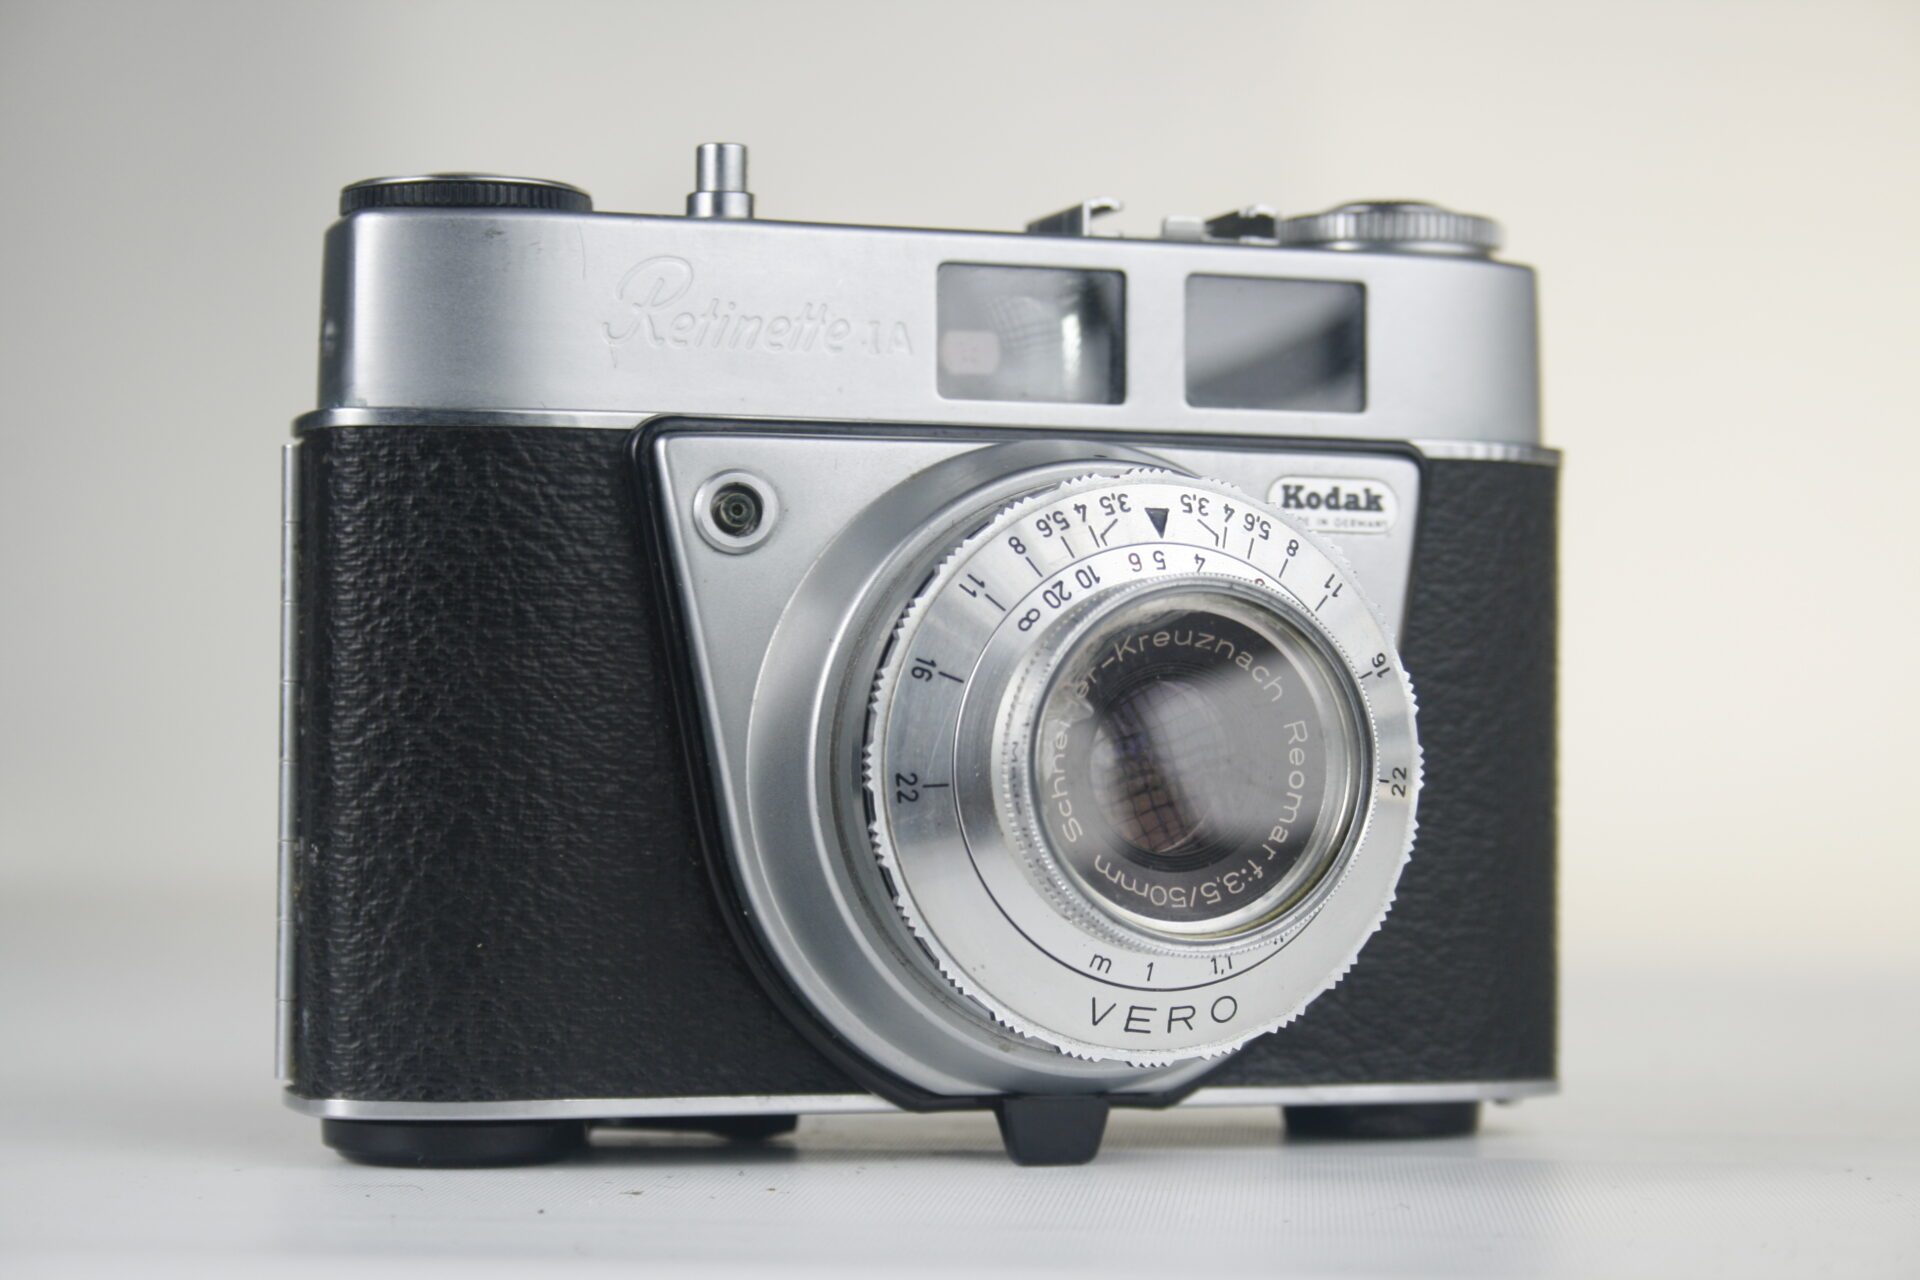 Kodak Retinette 1a. Viewfinder camera. 1959-1966. Duitsland